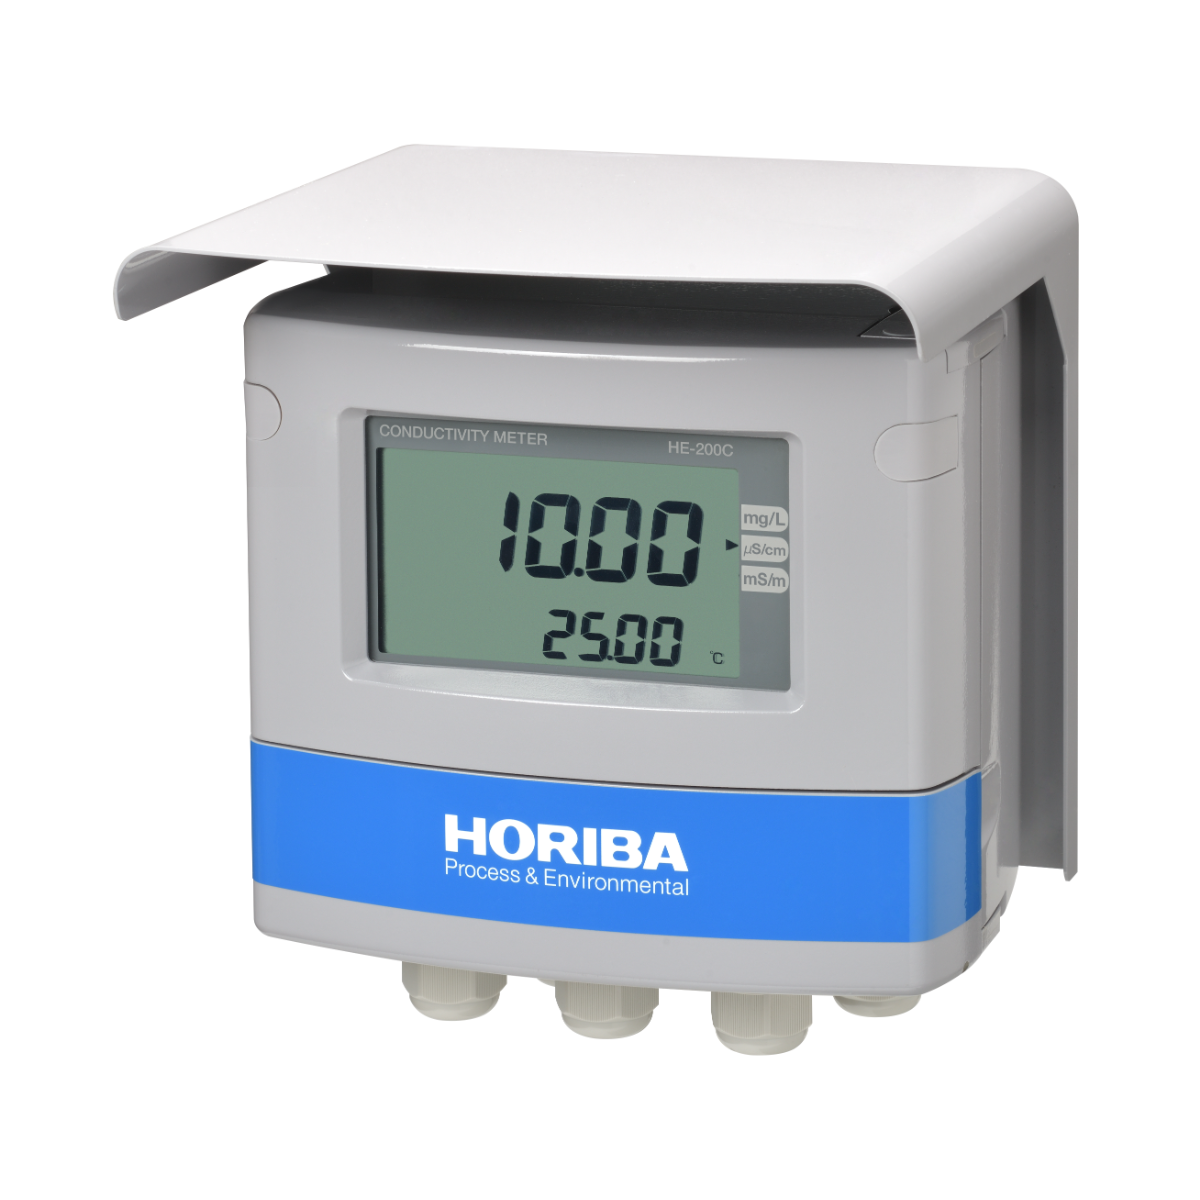 HE-200C 現場形電気伝導率計(導電率計) - HORIBA